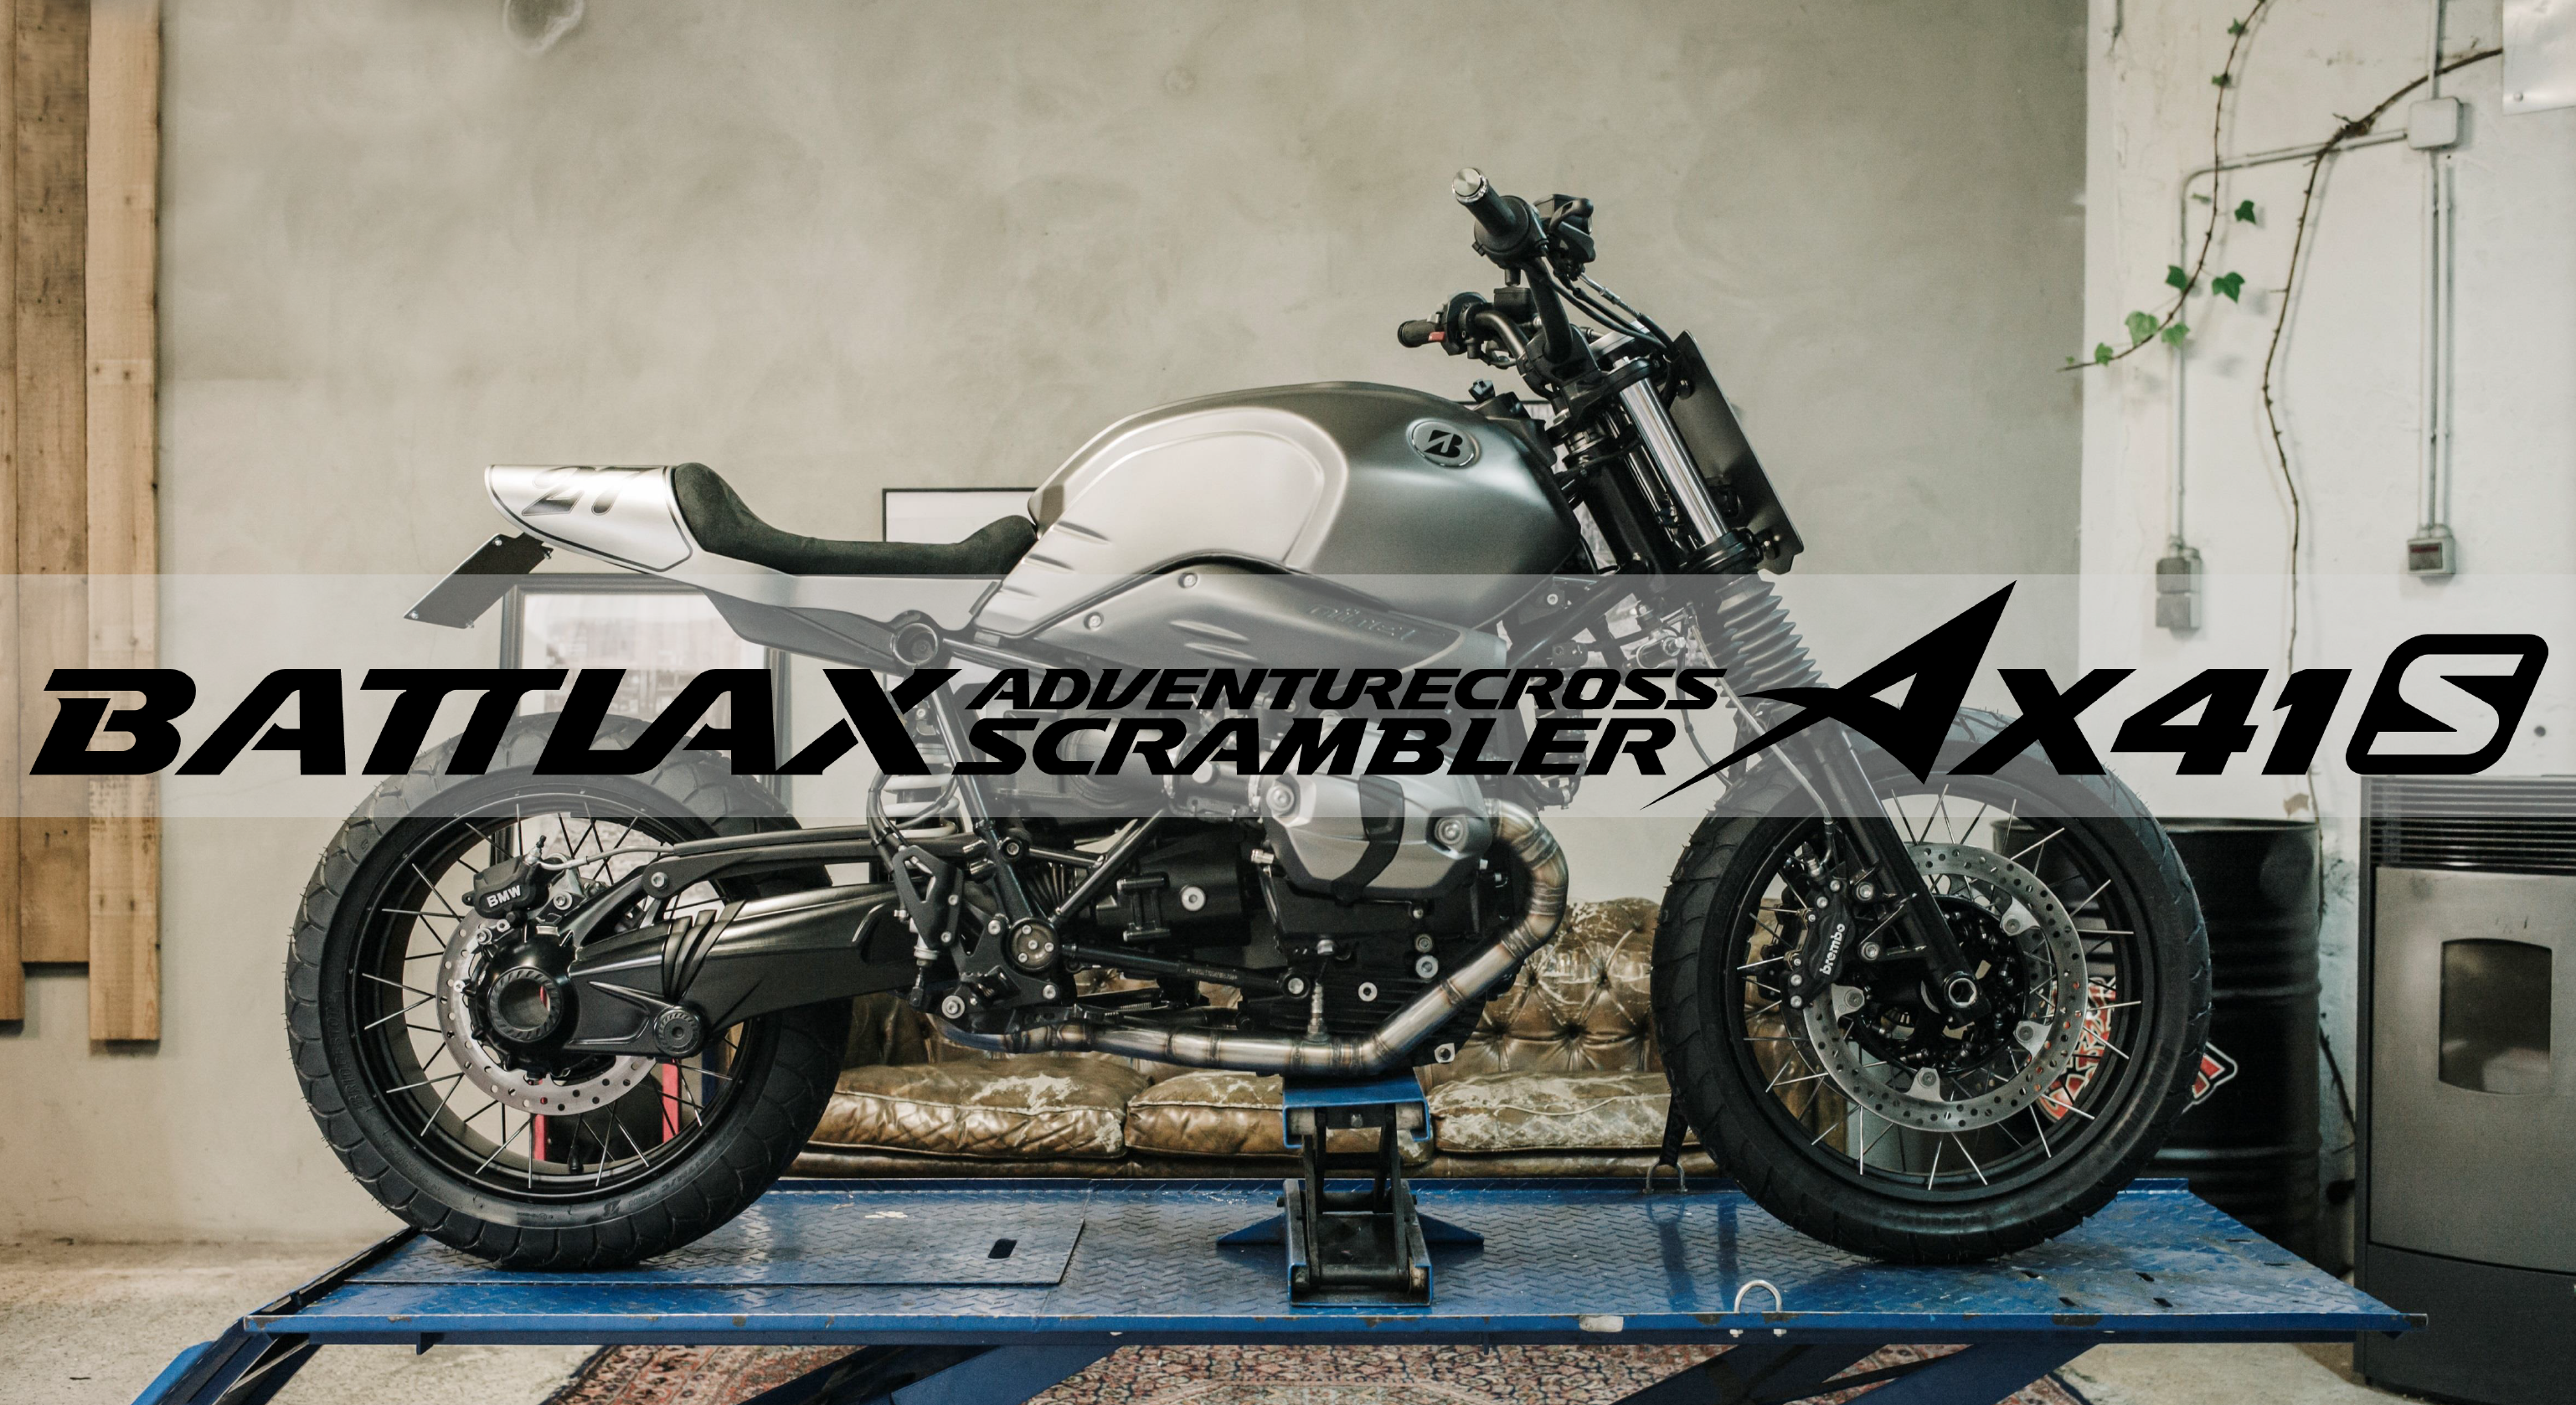 Le Battlax Adventurecross Scrambler AX41S